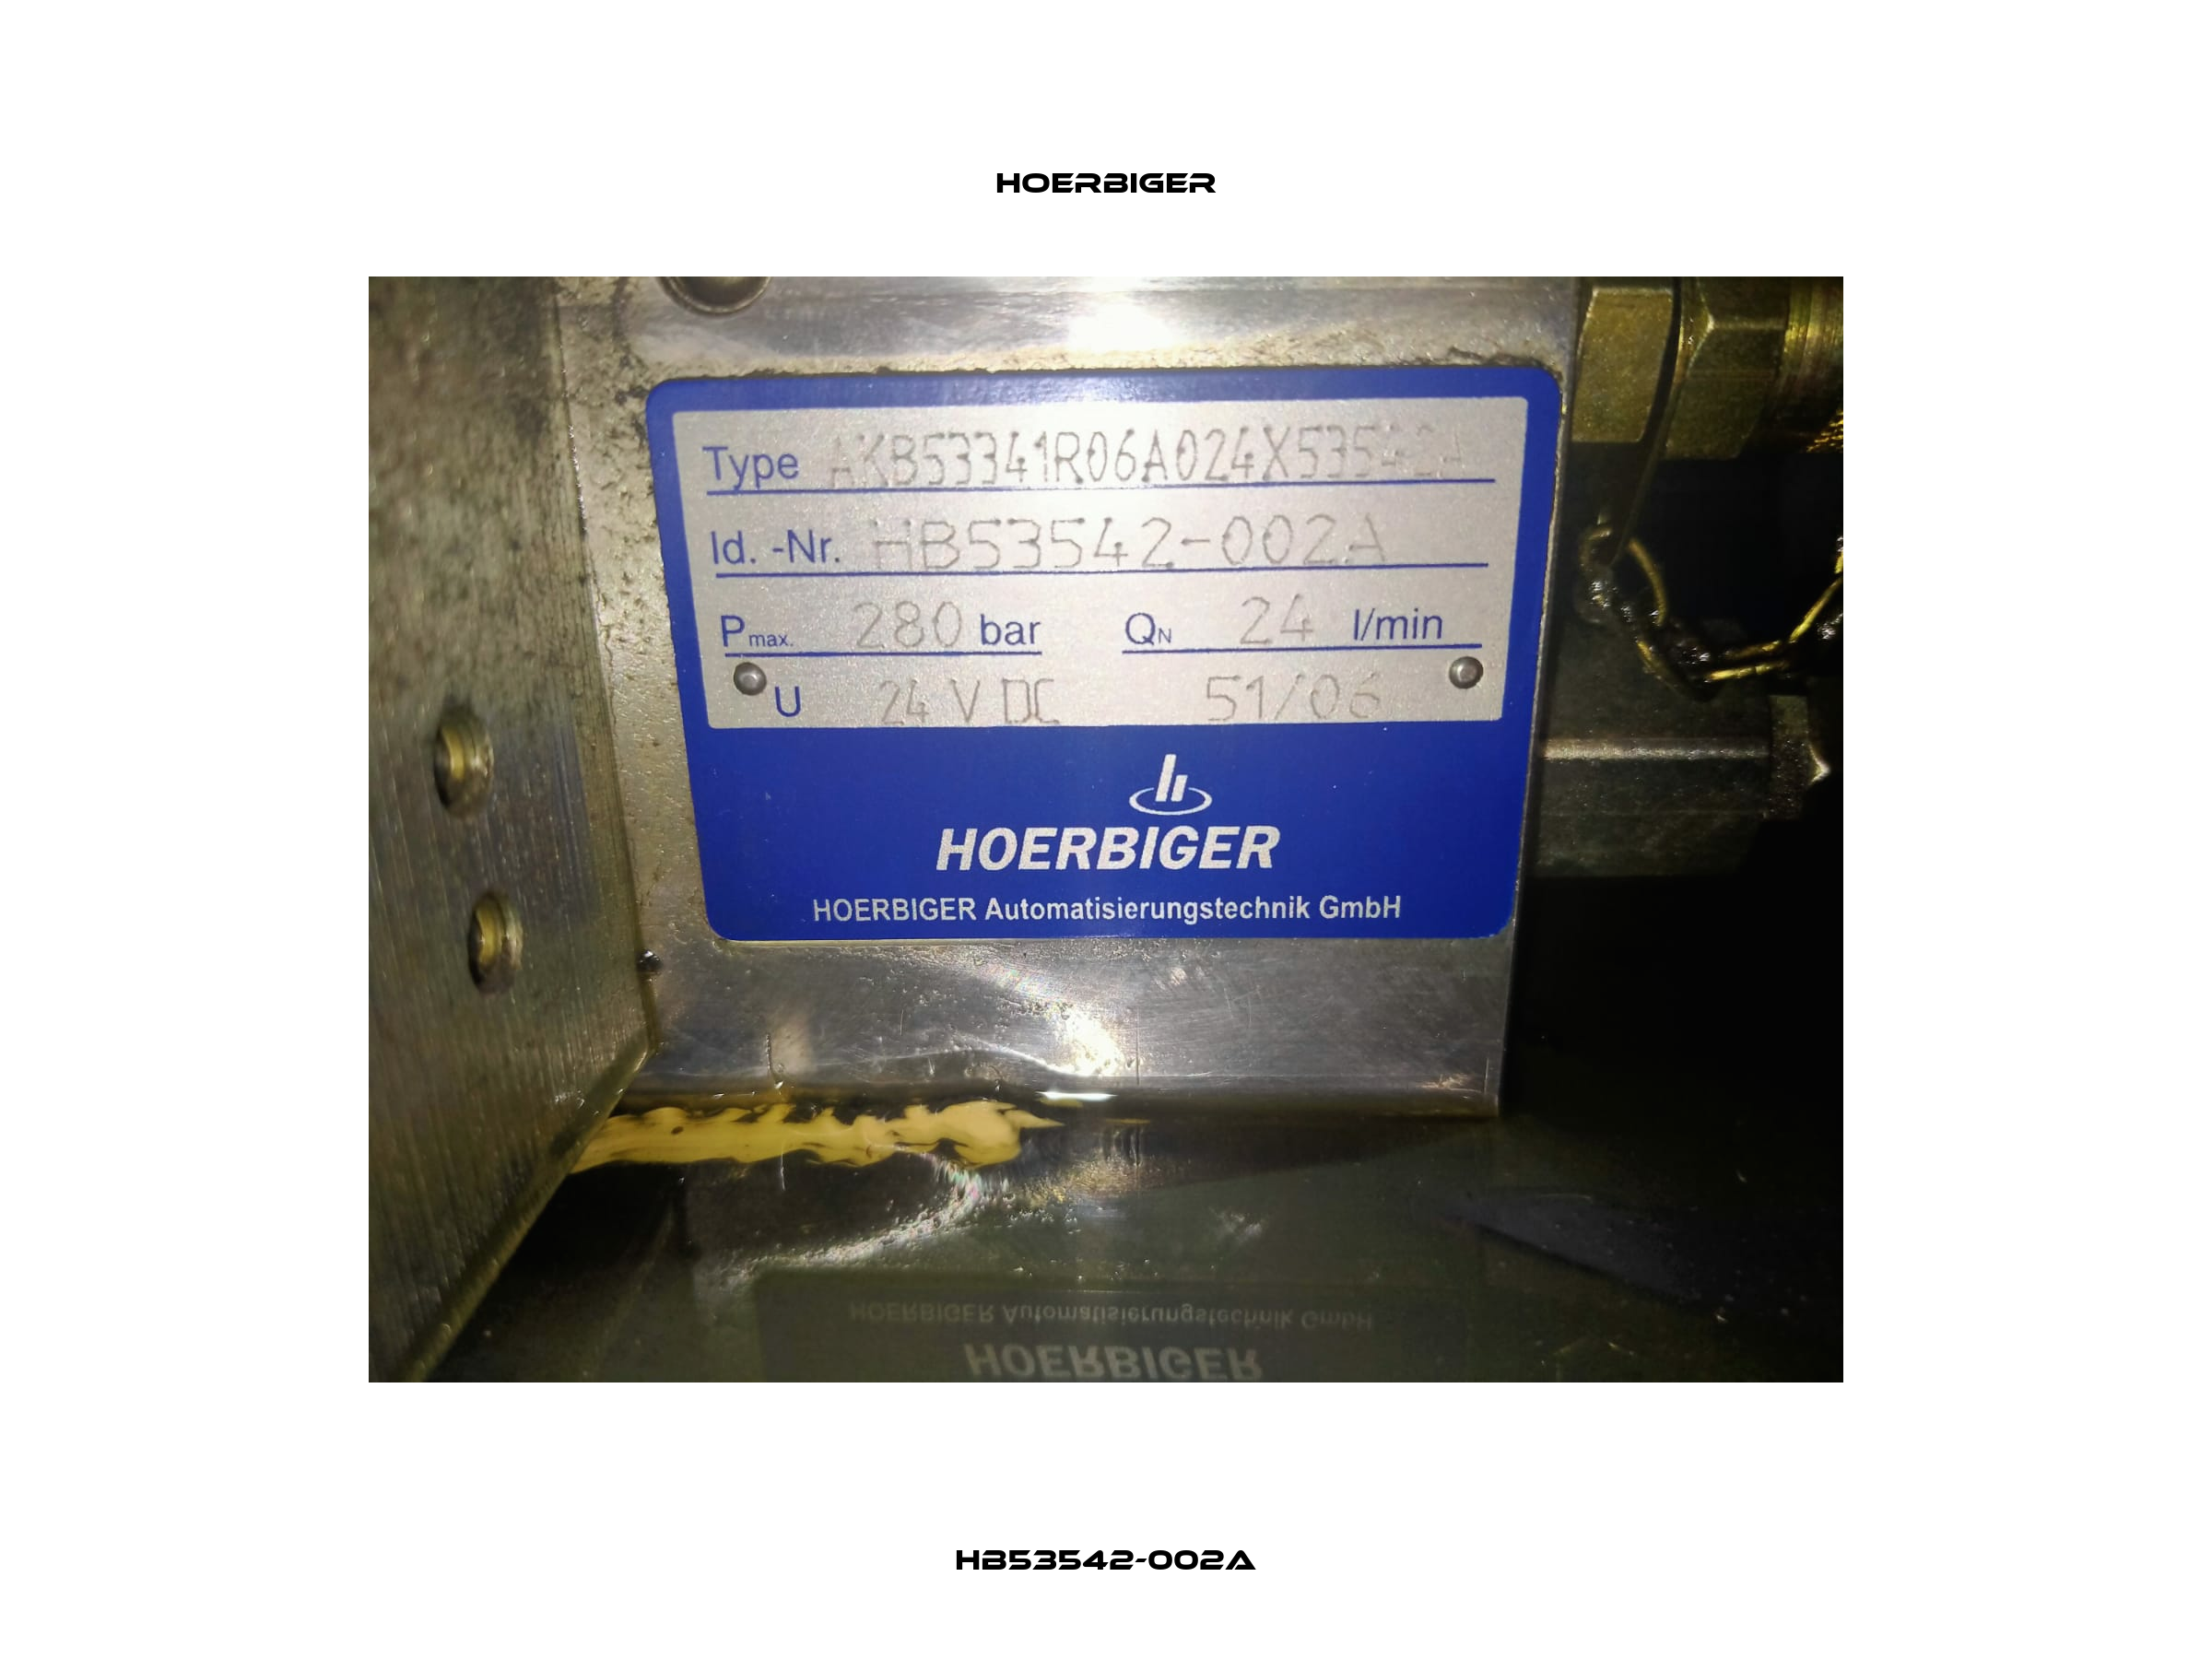 HB53542-002A Hoerbiger